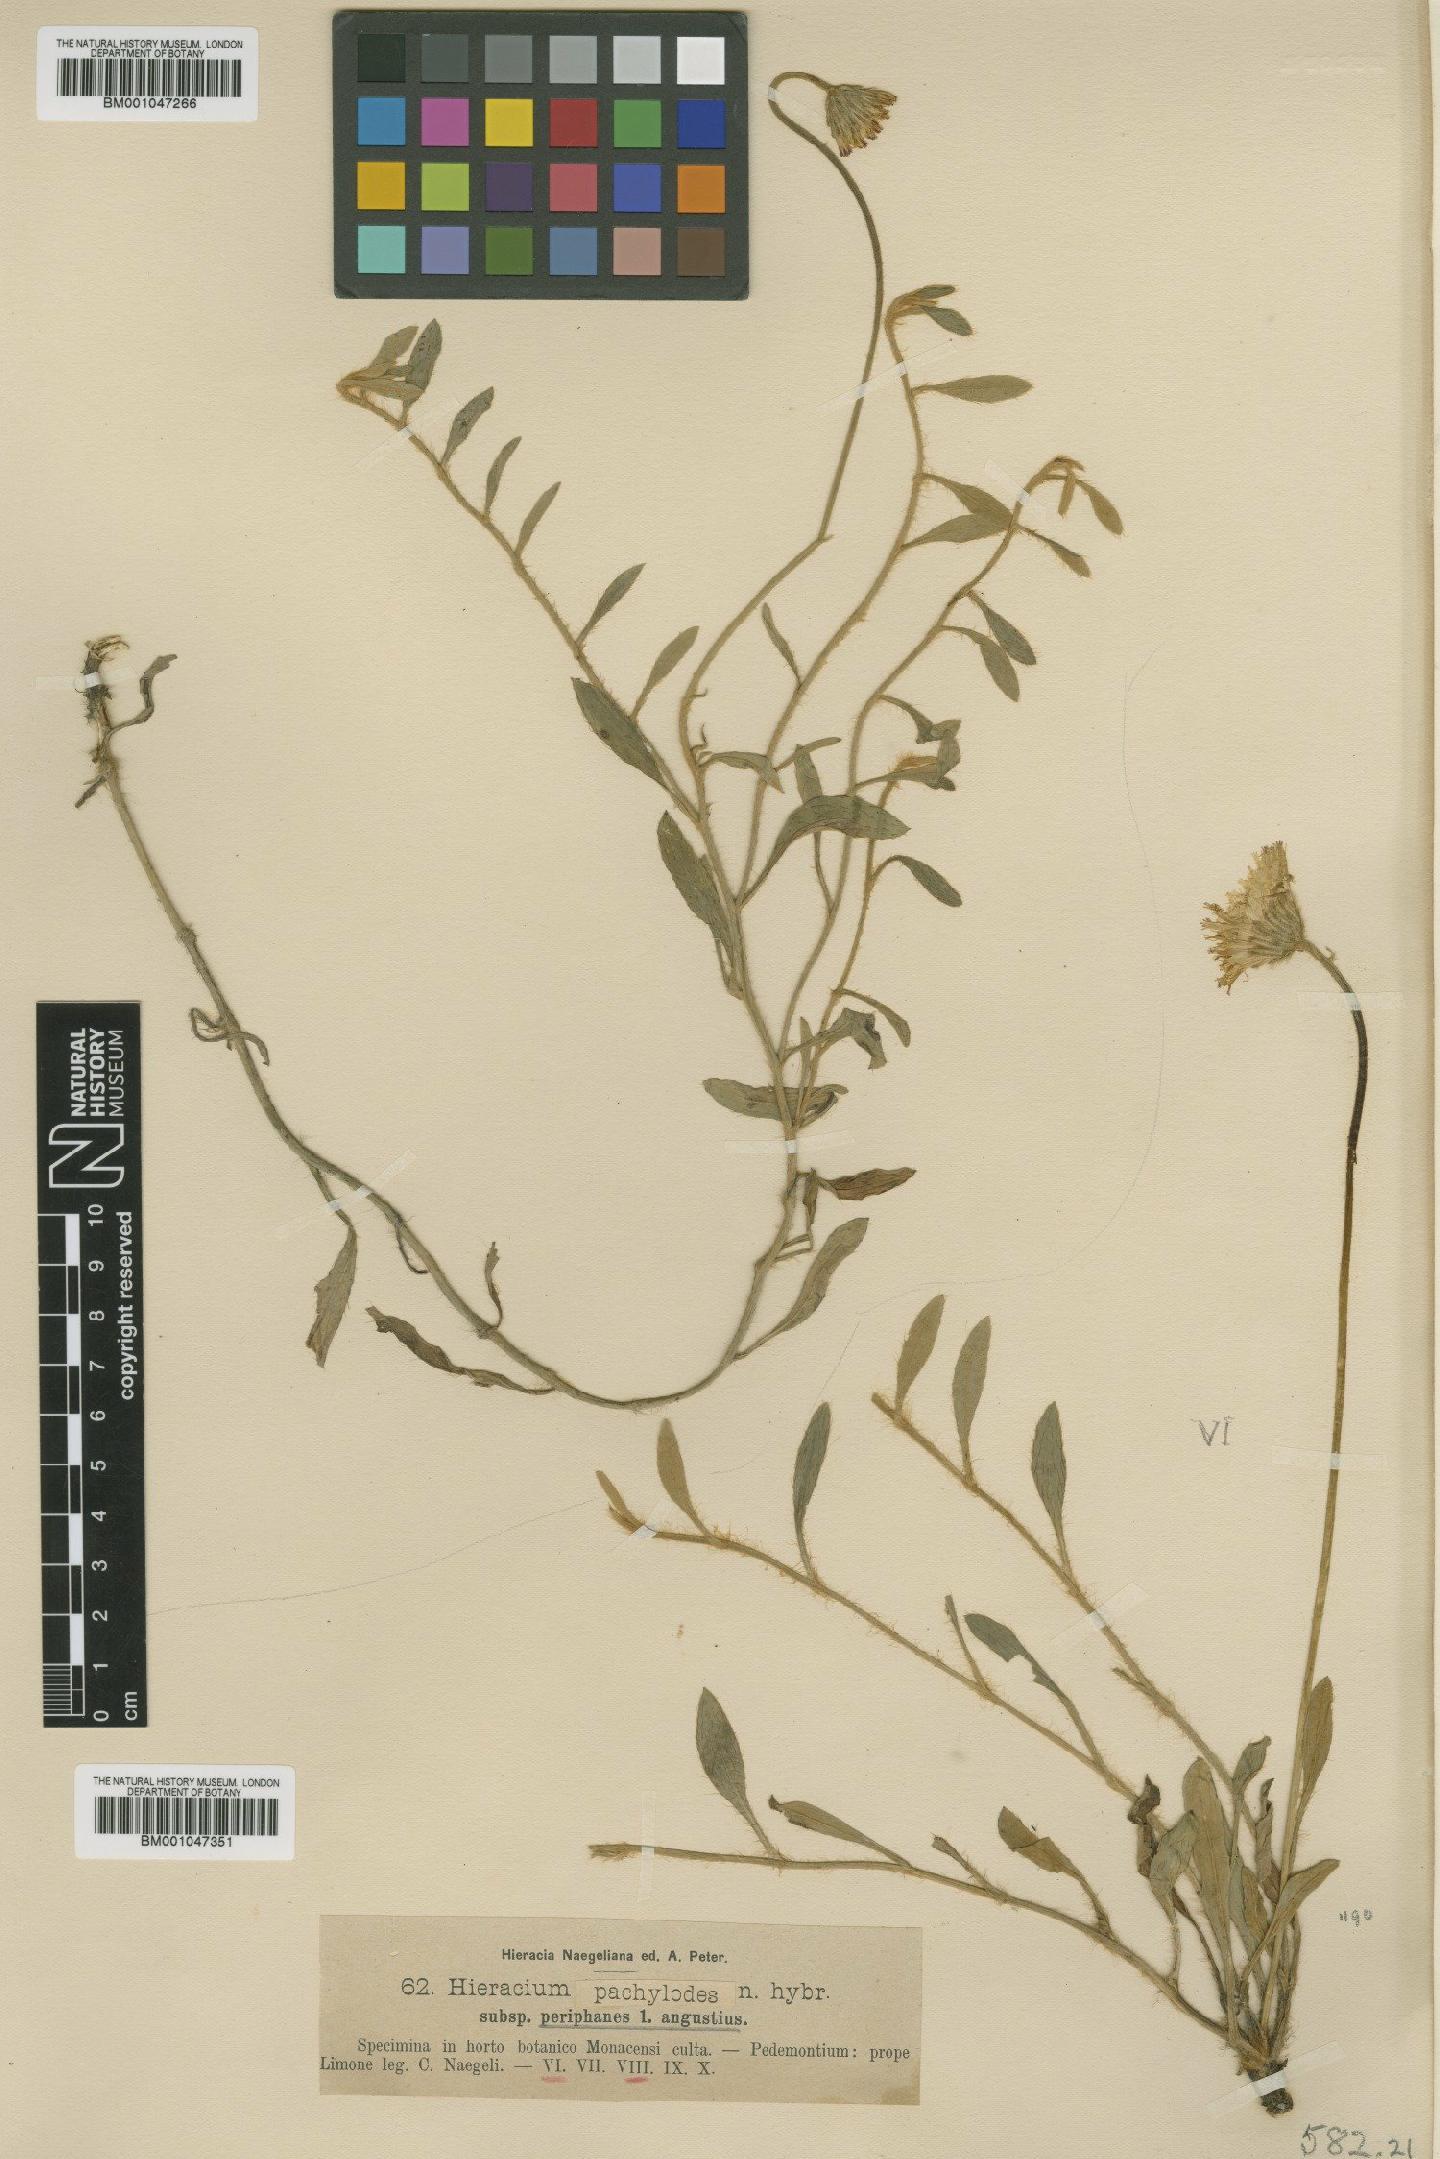 To NHMUK collection (Hieracium pachylodes subsp. periphanes Nägeli & Peter; NHMUK:ecatalogue:2757151)